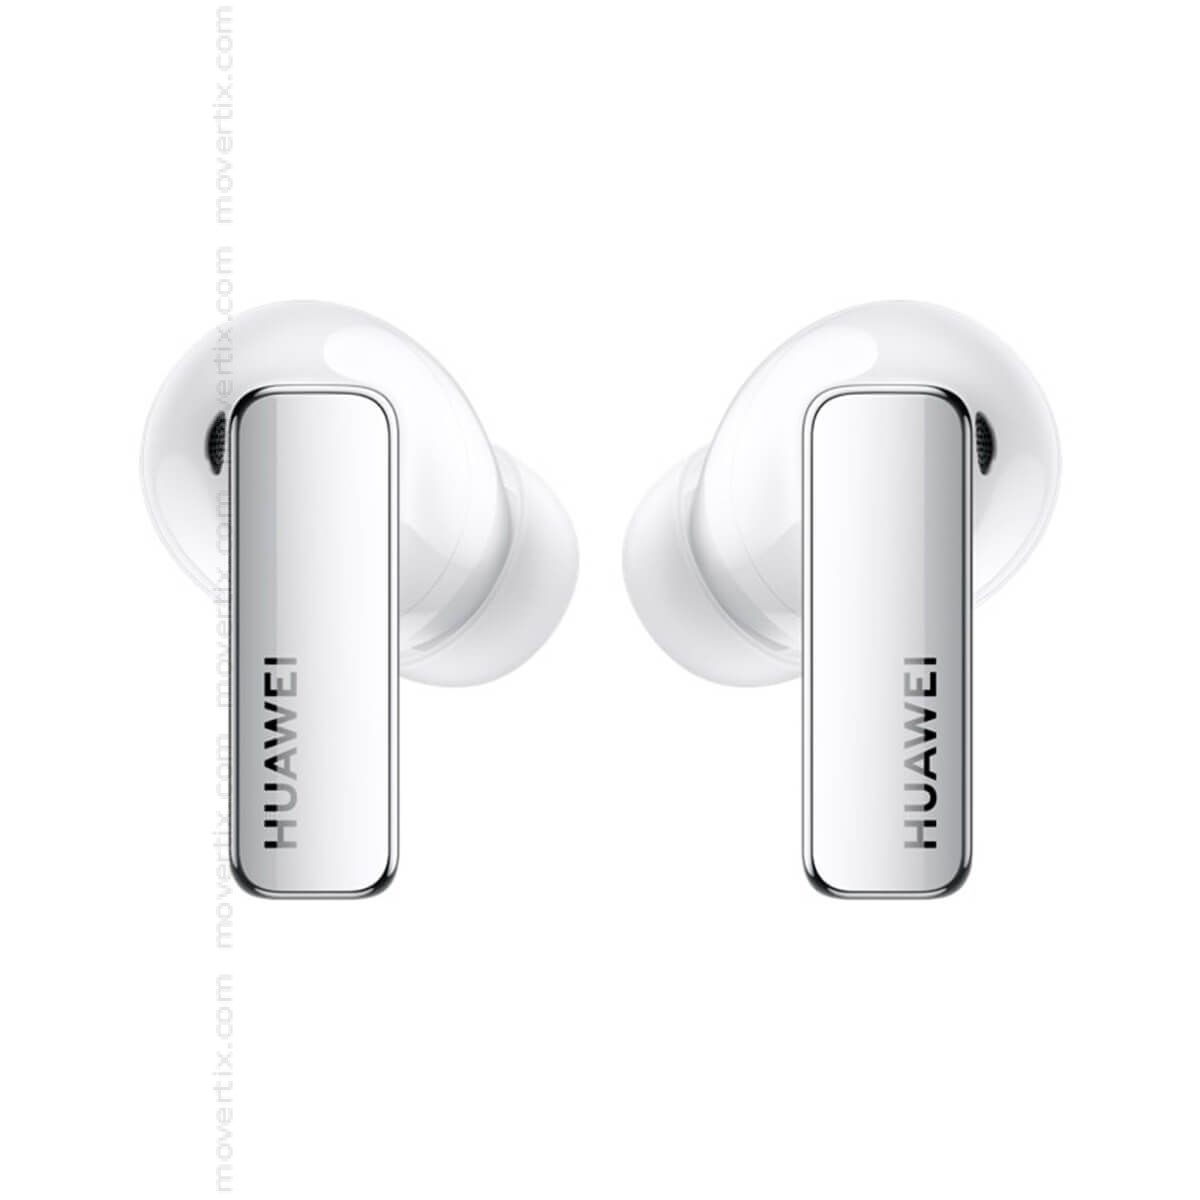  Huawei Freebuds Pro Active Noise Cancellation Earbuds  MermaidTWS - Ceramic White : Electronics